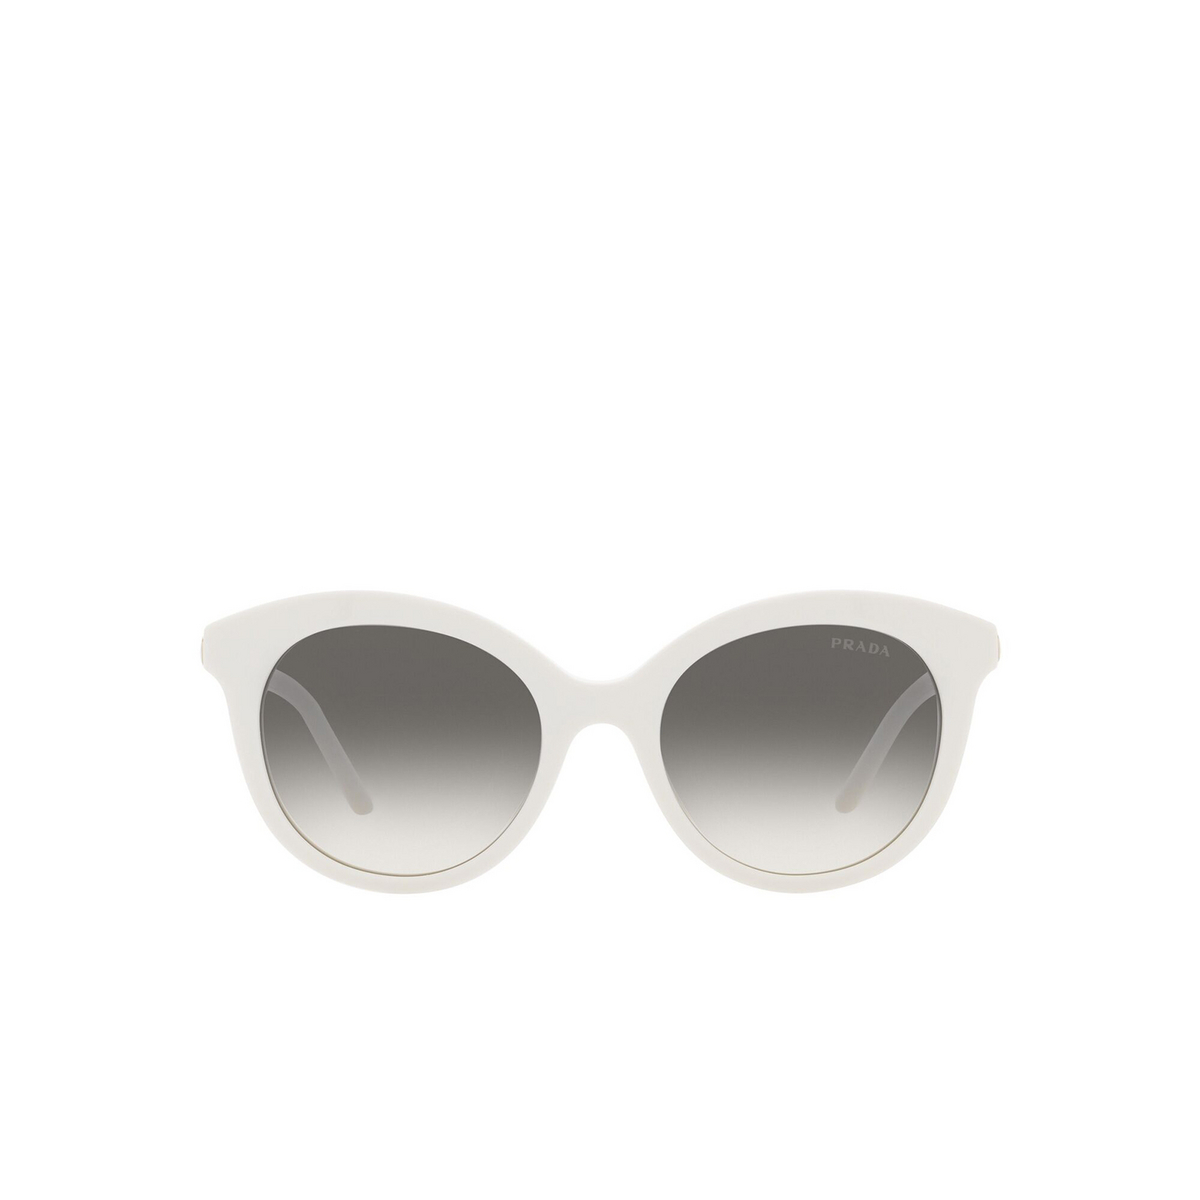 Prada® Round Sunglasses: PR 02YS color Talc 142130 - front view.